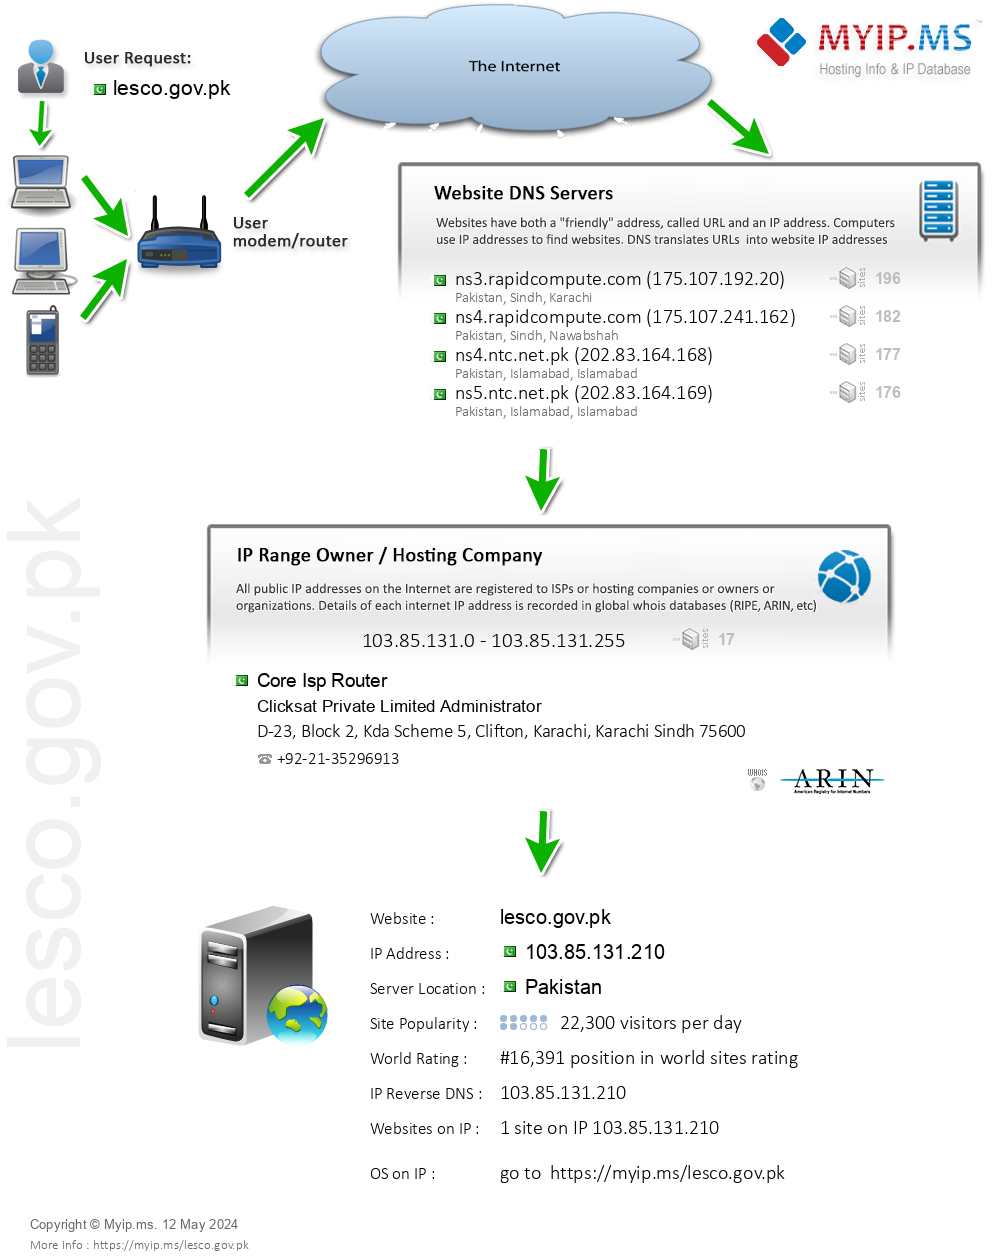 Lesco.gov.pk - Website Hosting Visual IP Diagram